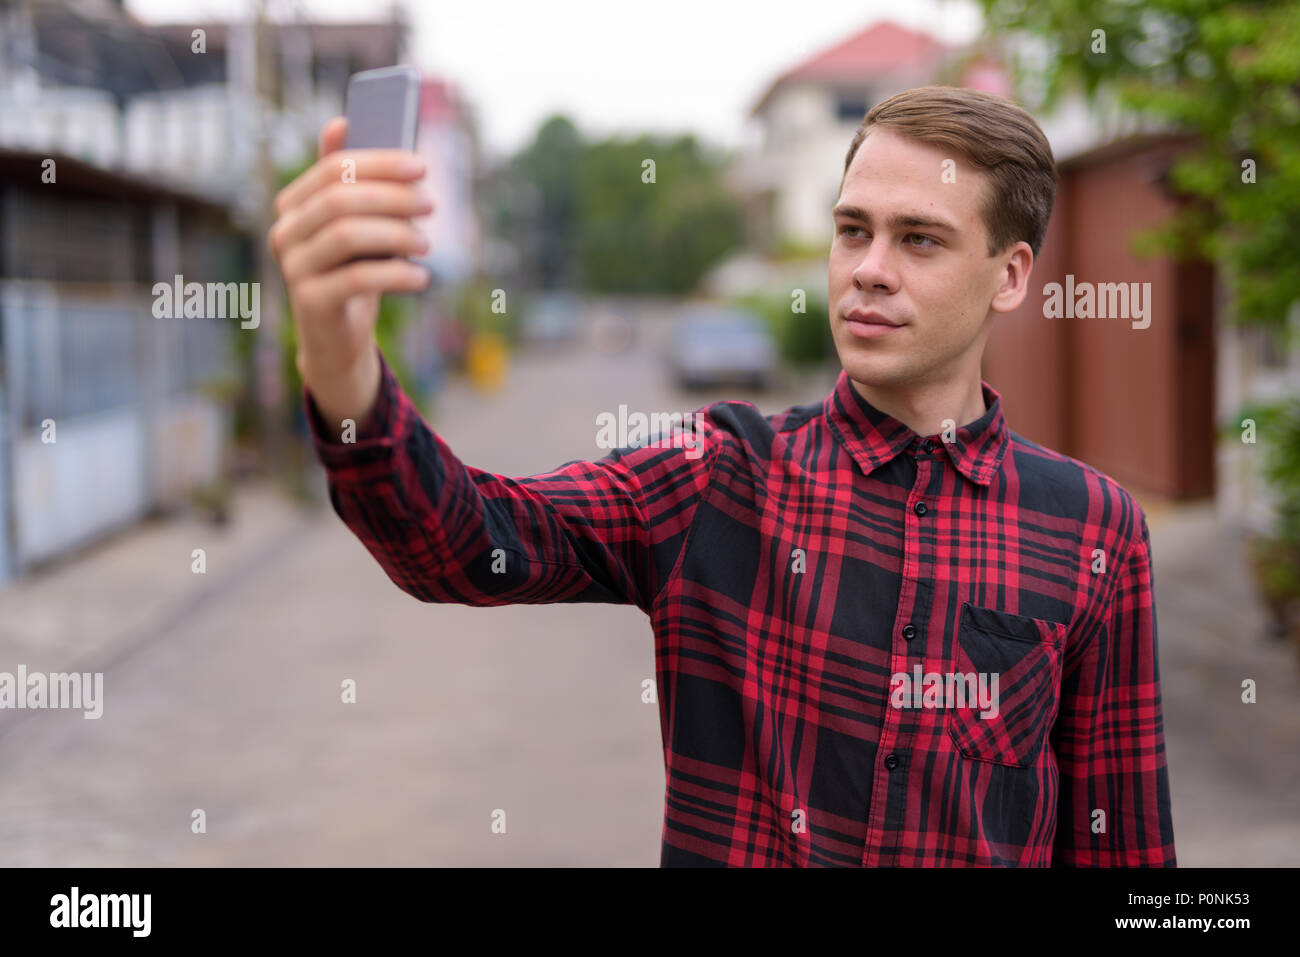 Man taking selfie outdoors Stock Photo